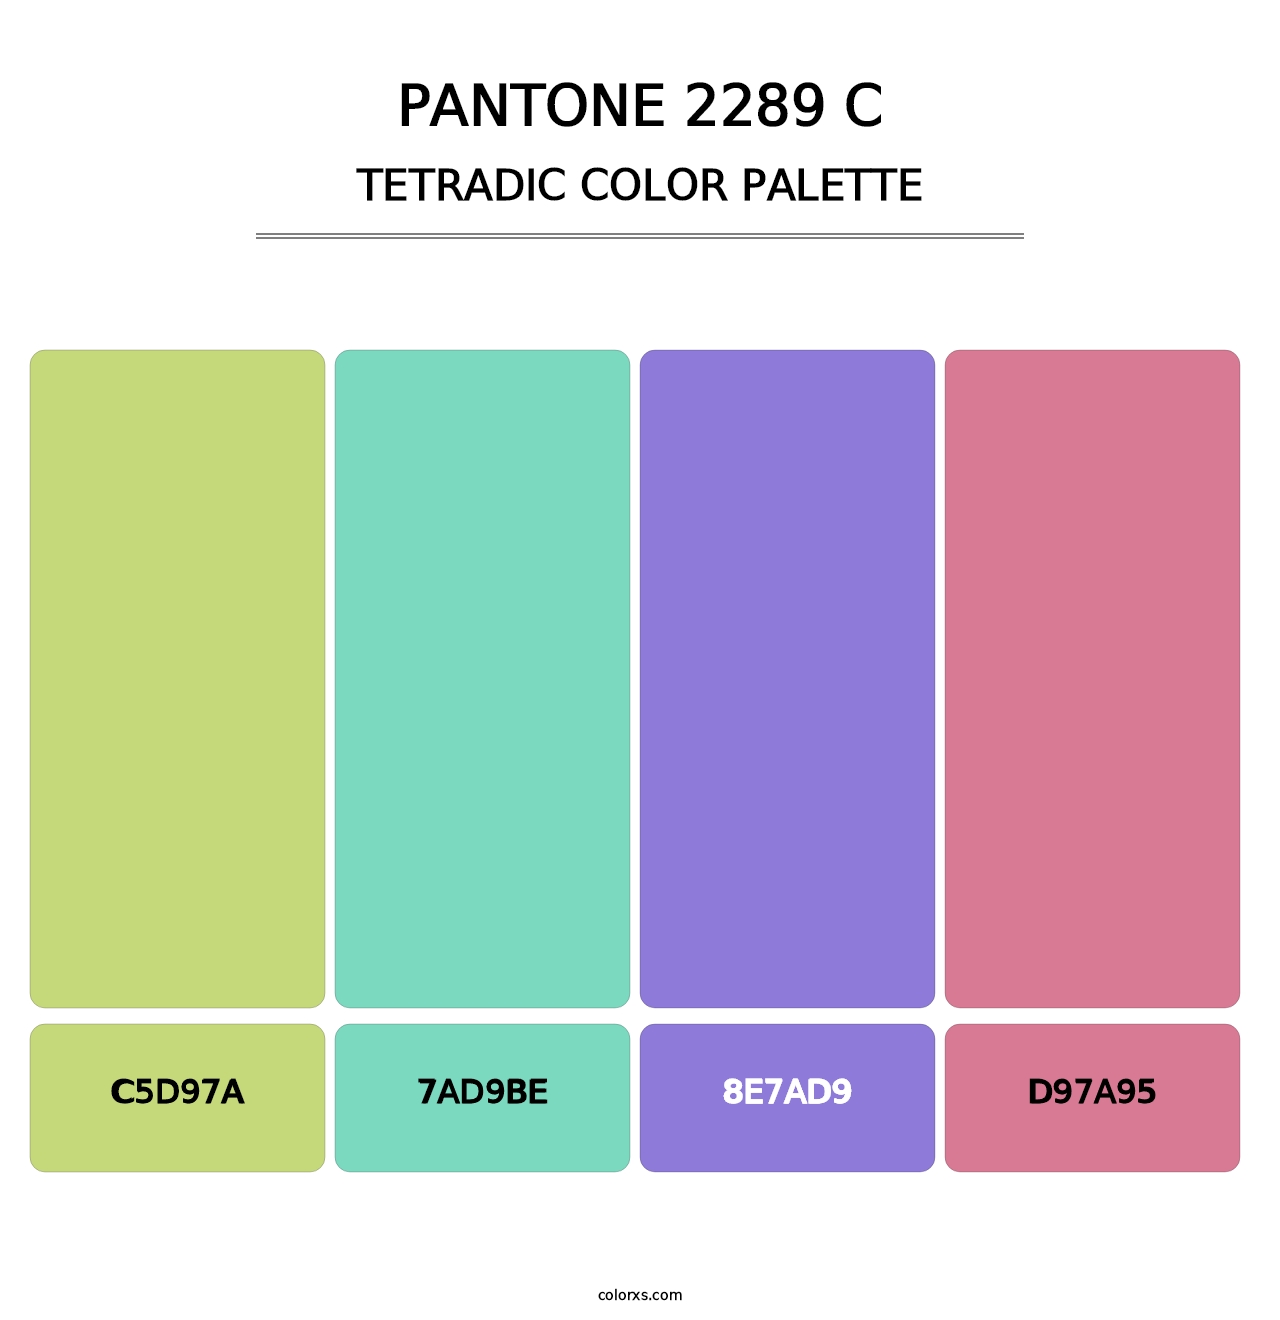 PANTONE 2289 C - Tetradic Color Palette